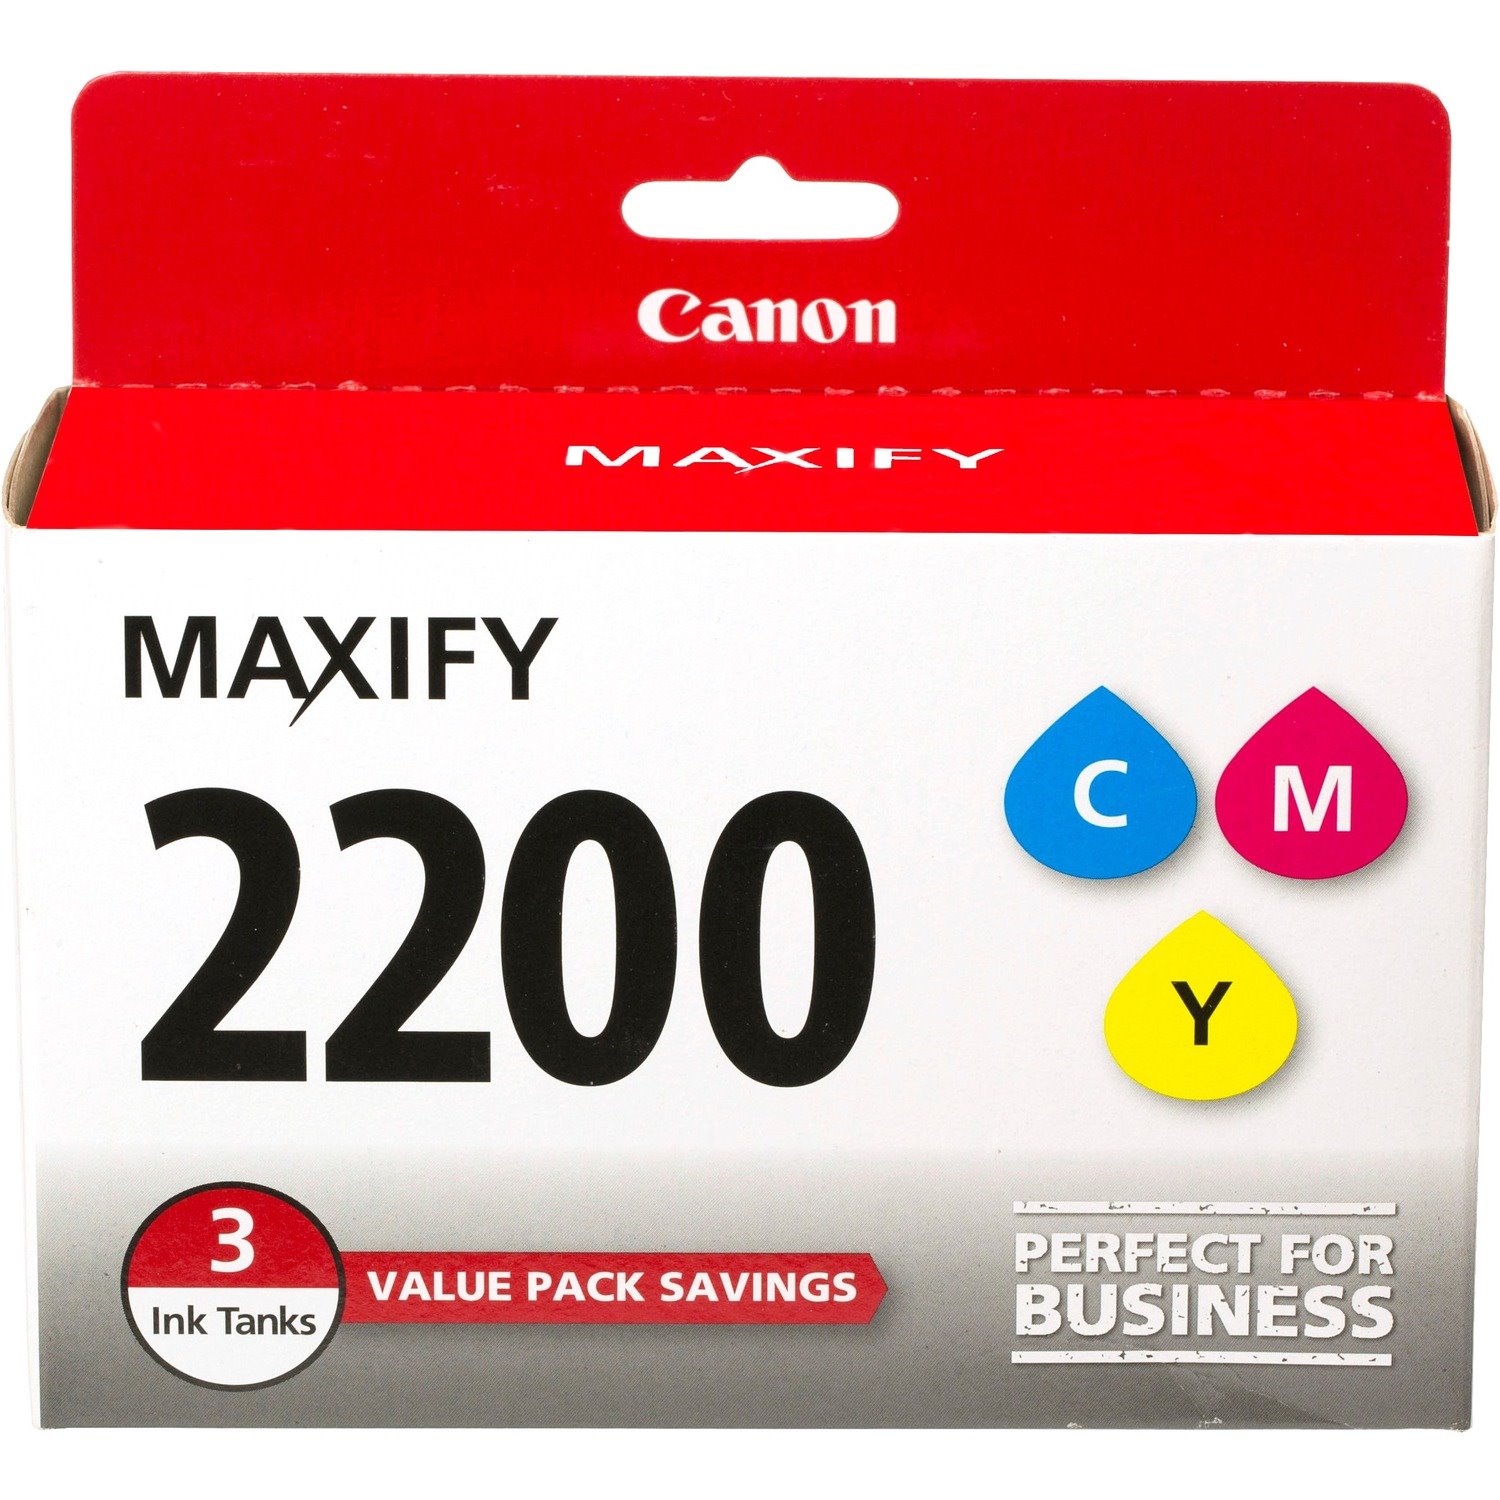 Canon PGI-2200 CMY Original Inkjet Ink Cartridge - Yellow, Cyan, Magenta - 3 Pack